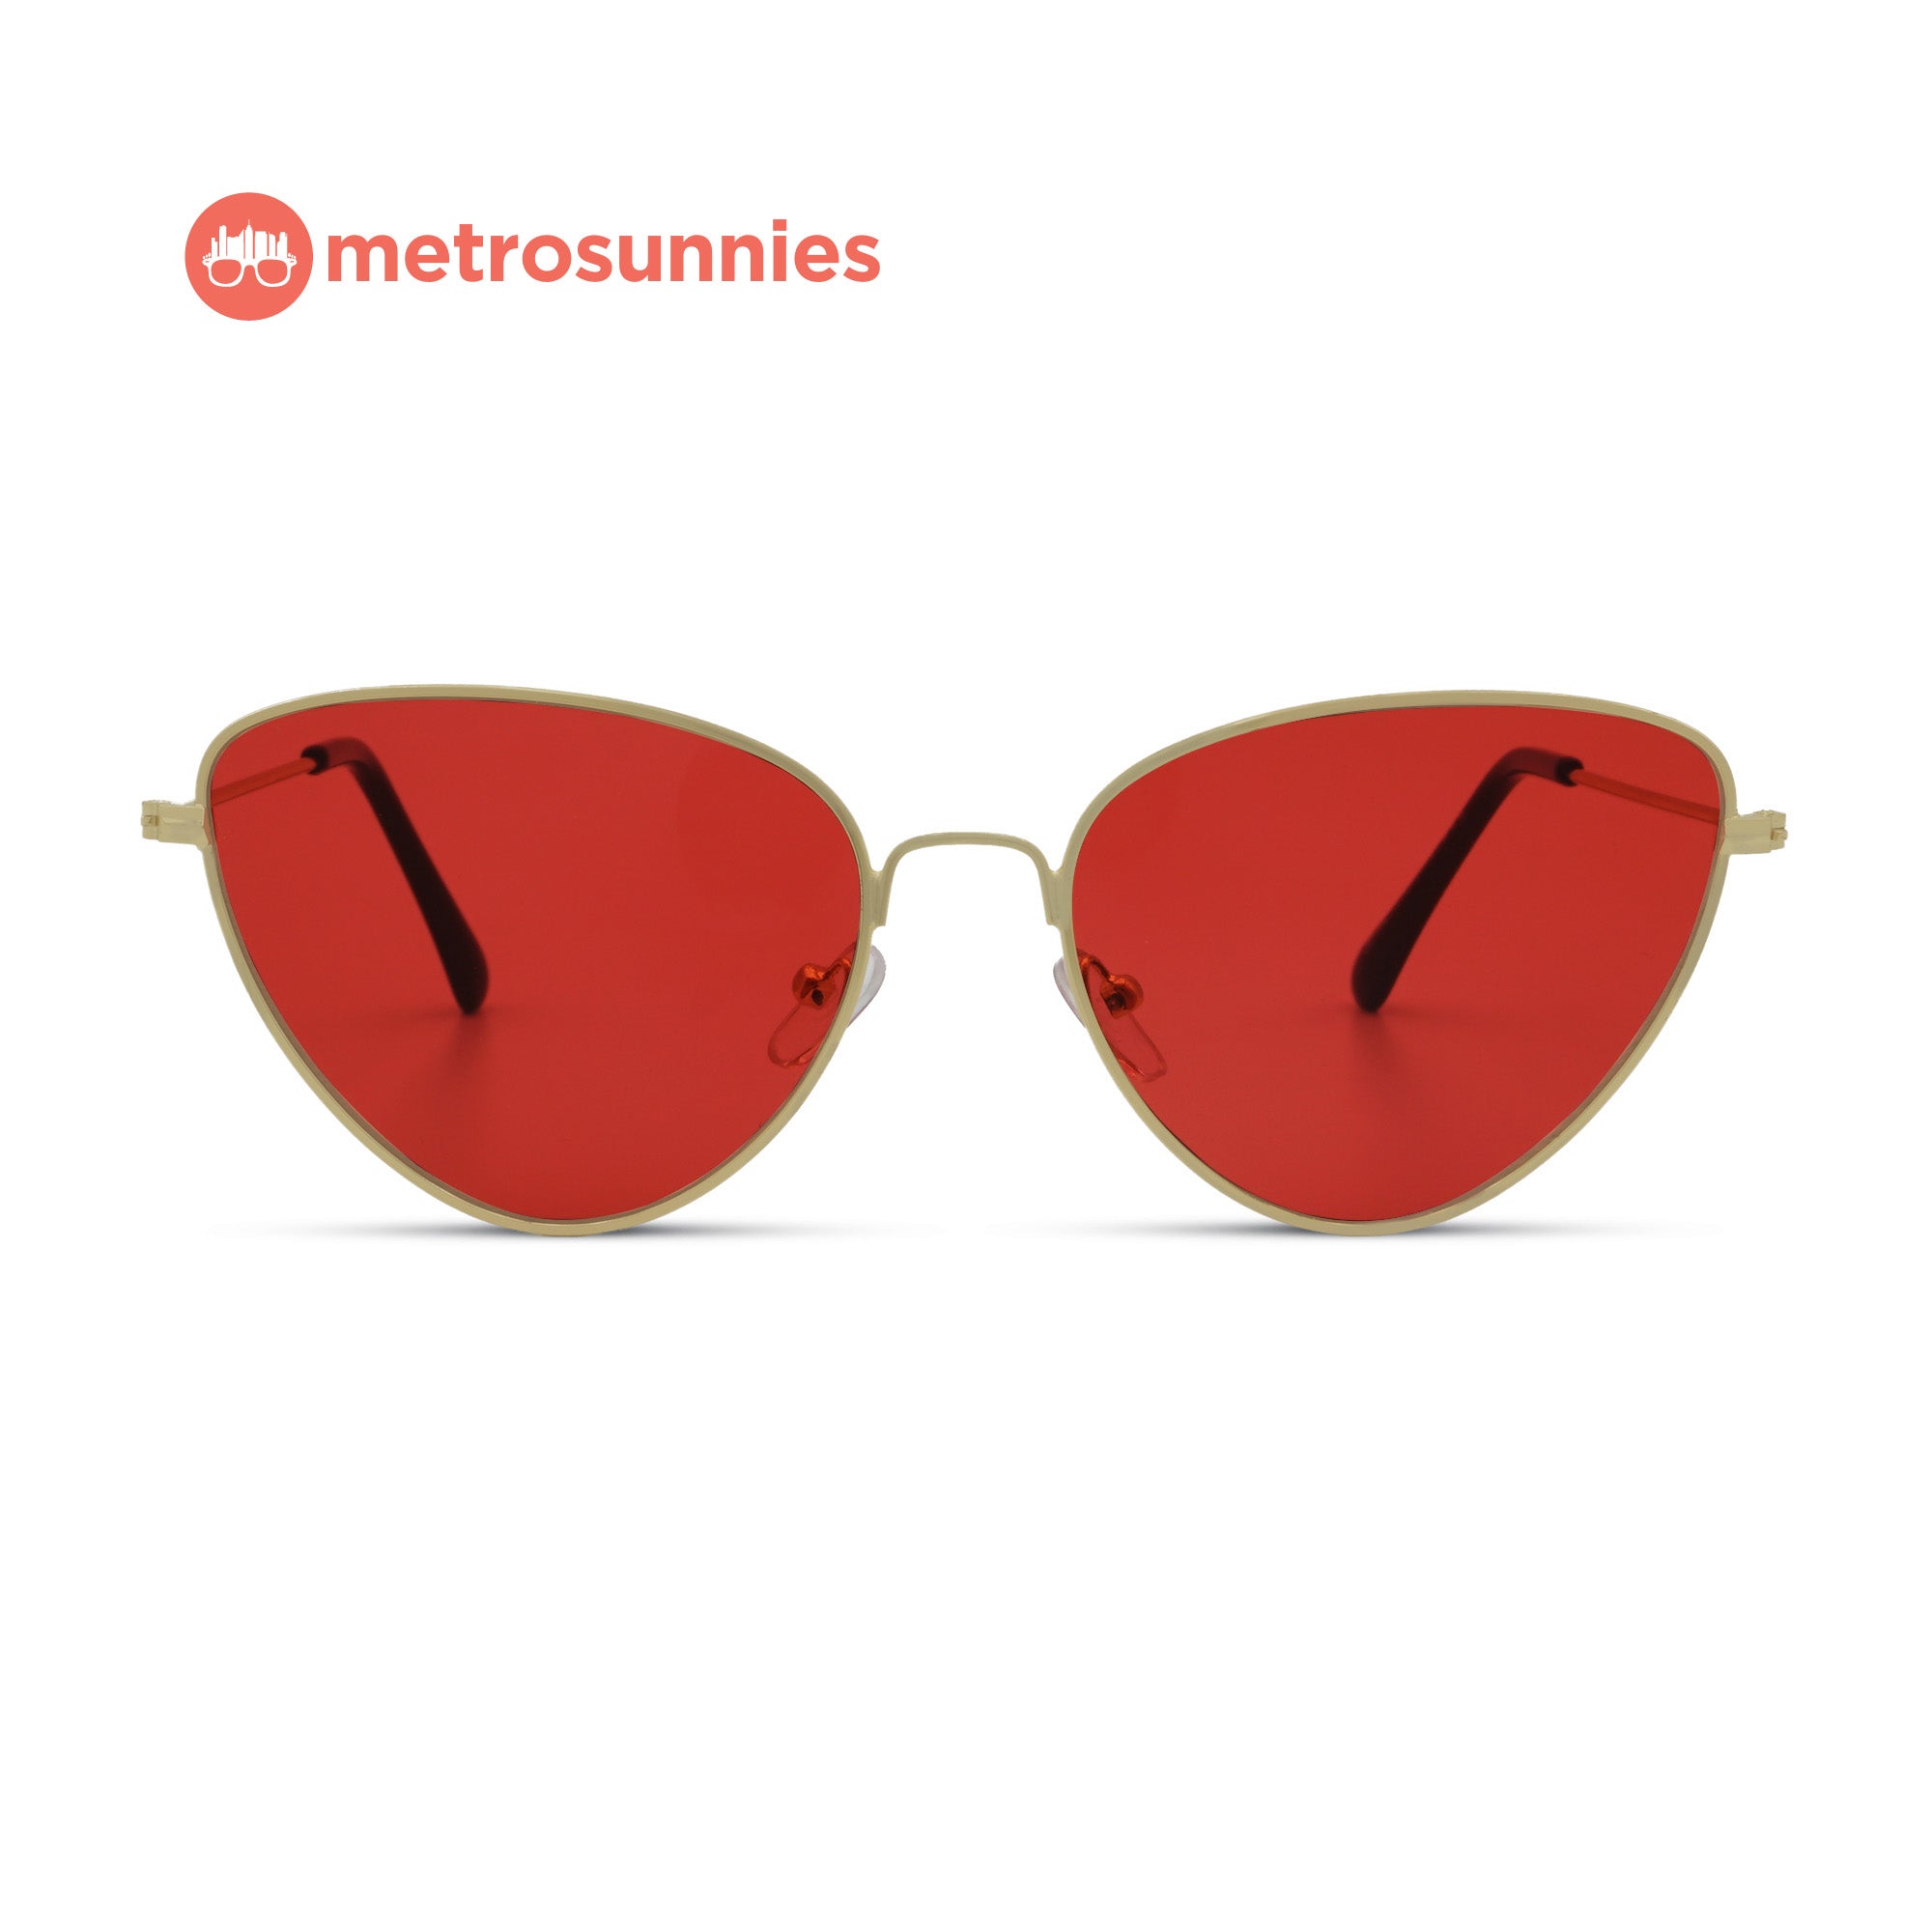 MetroSunnies Meg Sunnies (Vermillion) / Sunglasses with UV400 Protection / Fashion Eyewear Unisex